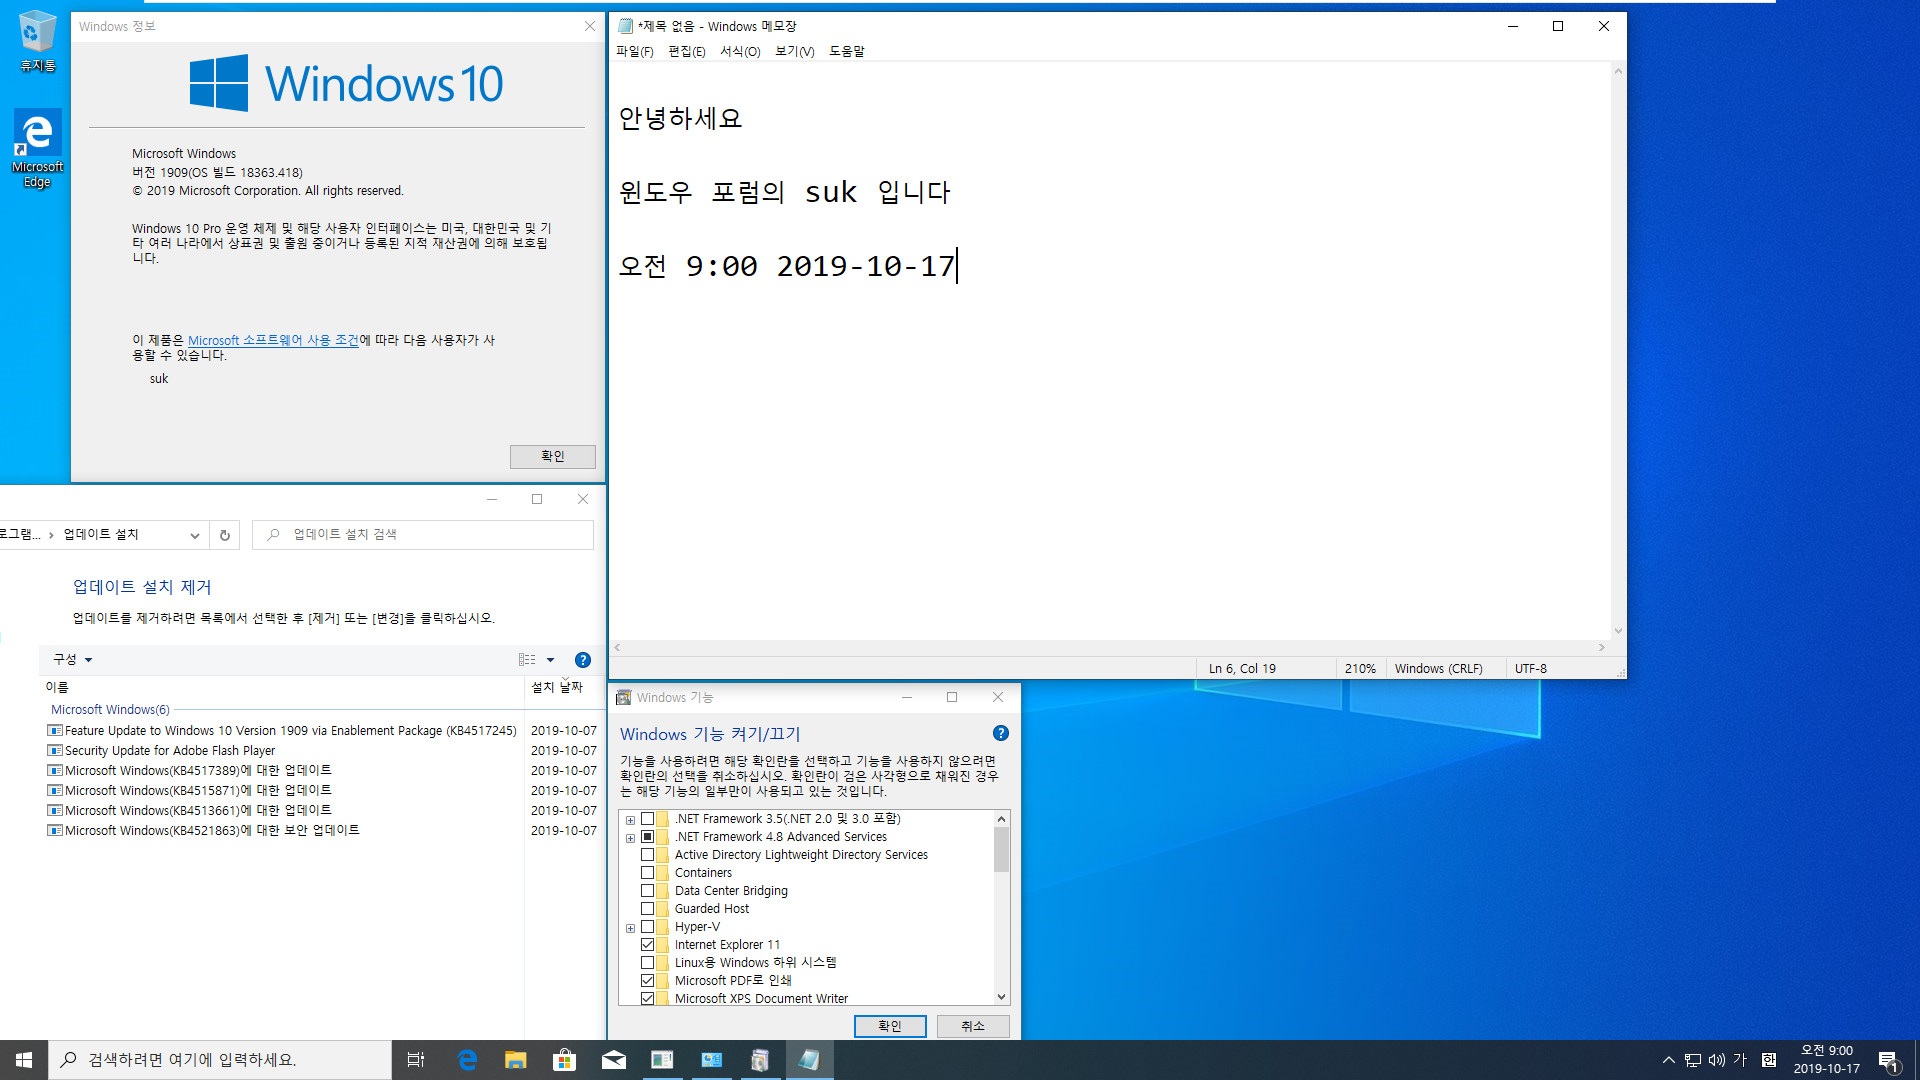 Windows 10 버전 1909 (OS빌드 18363.418) 코드네임 19H2 첫 MSDN 영문판 나왔네요 - 설치 테스트 - 한글 언어팩 설치하고, 한영 전환 때문에 키보드 레이아웃 변경 2019-10-17_090059.jpg